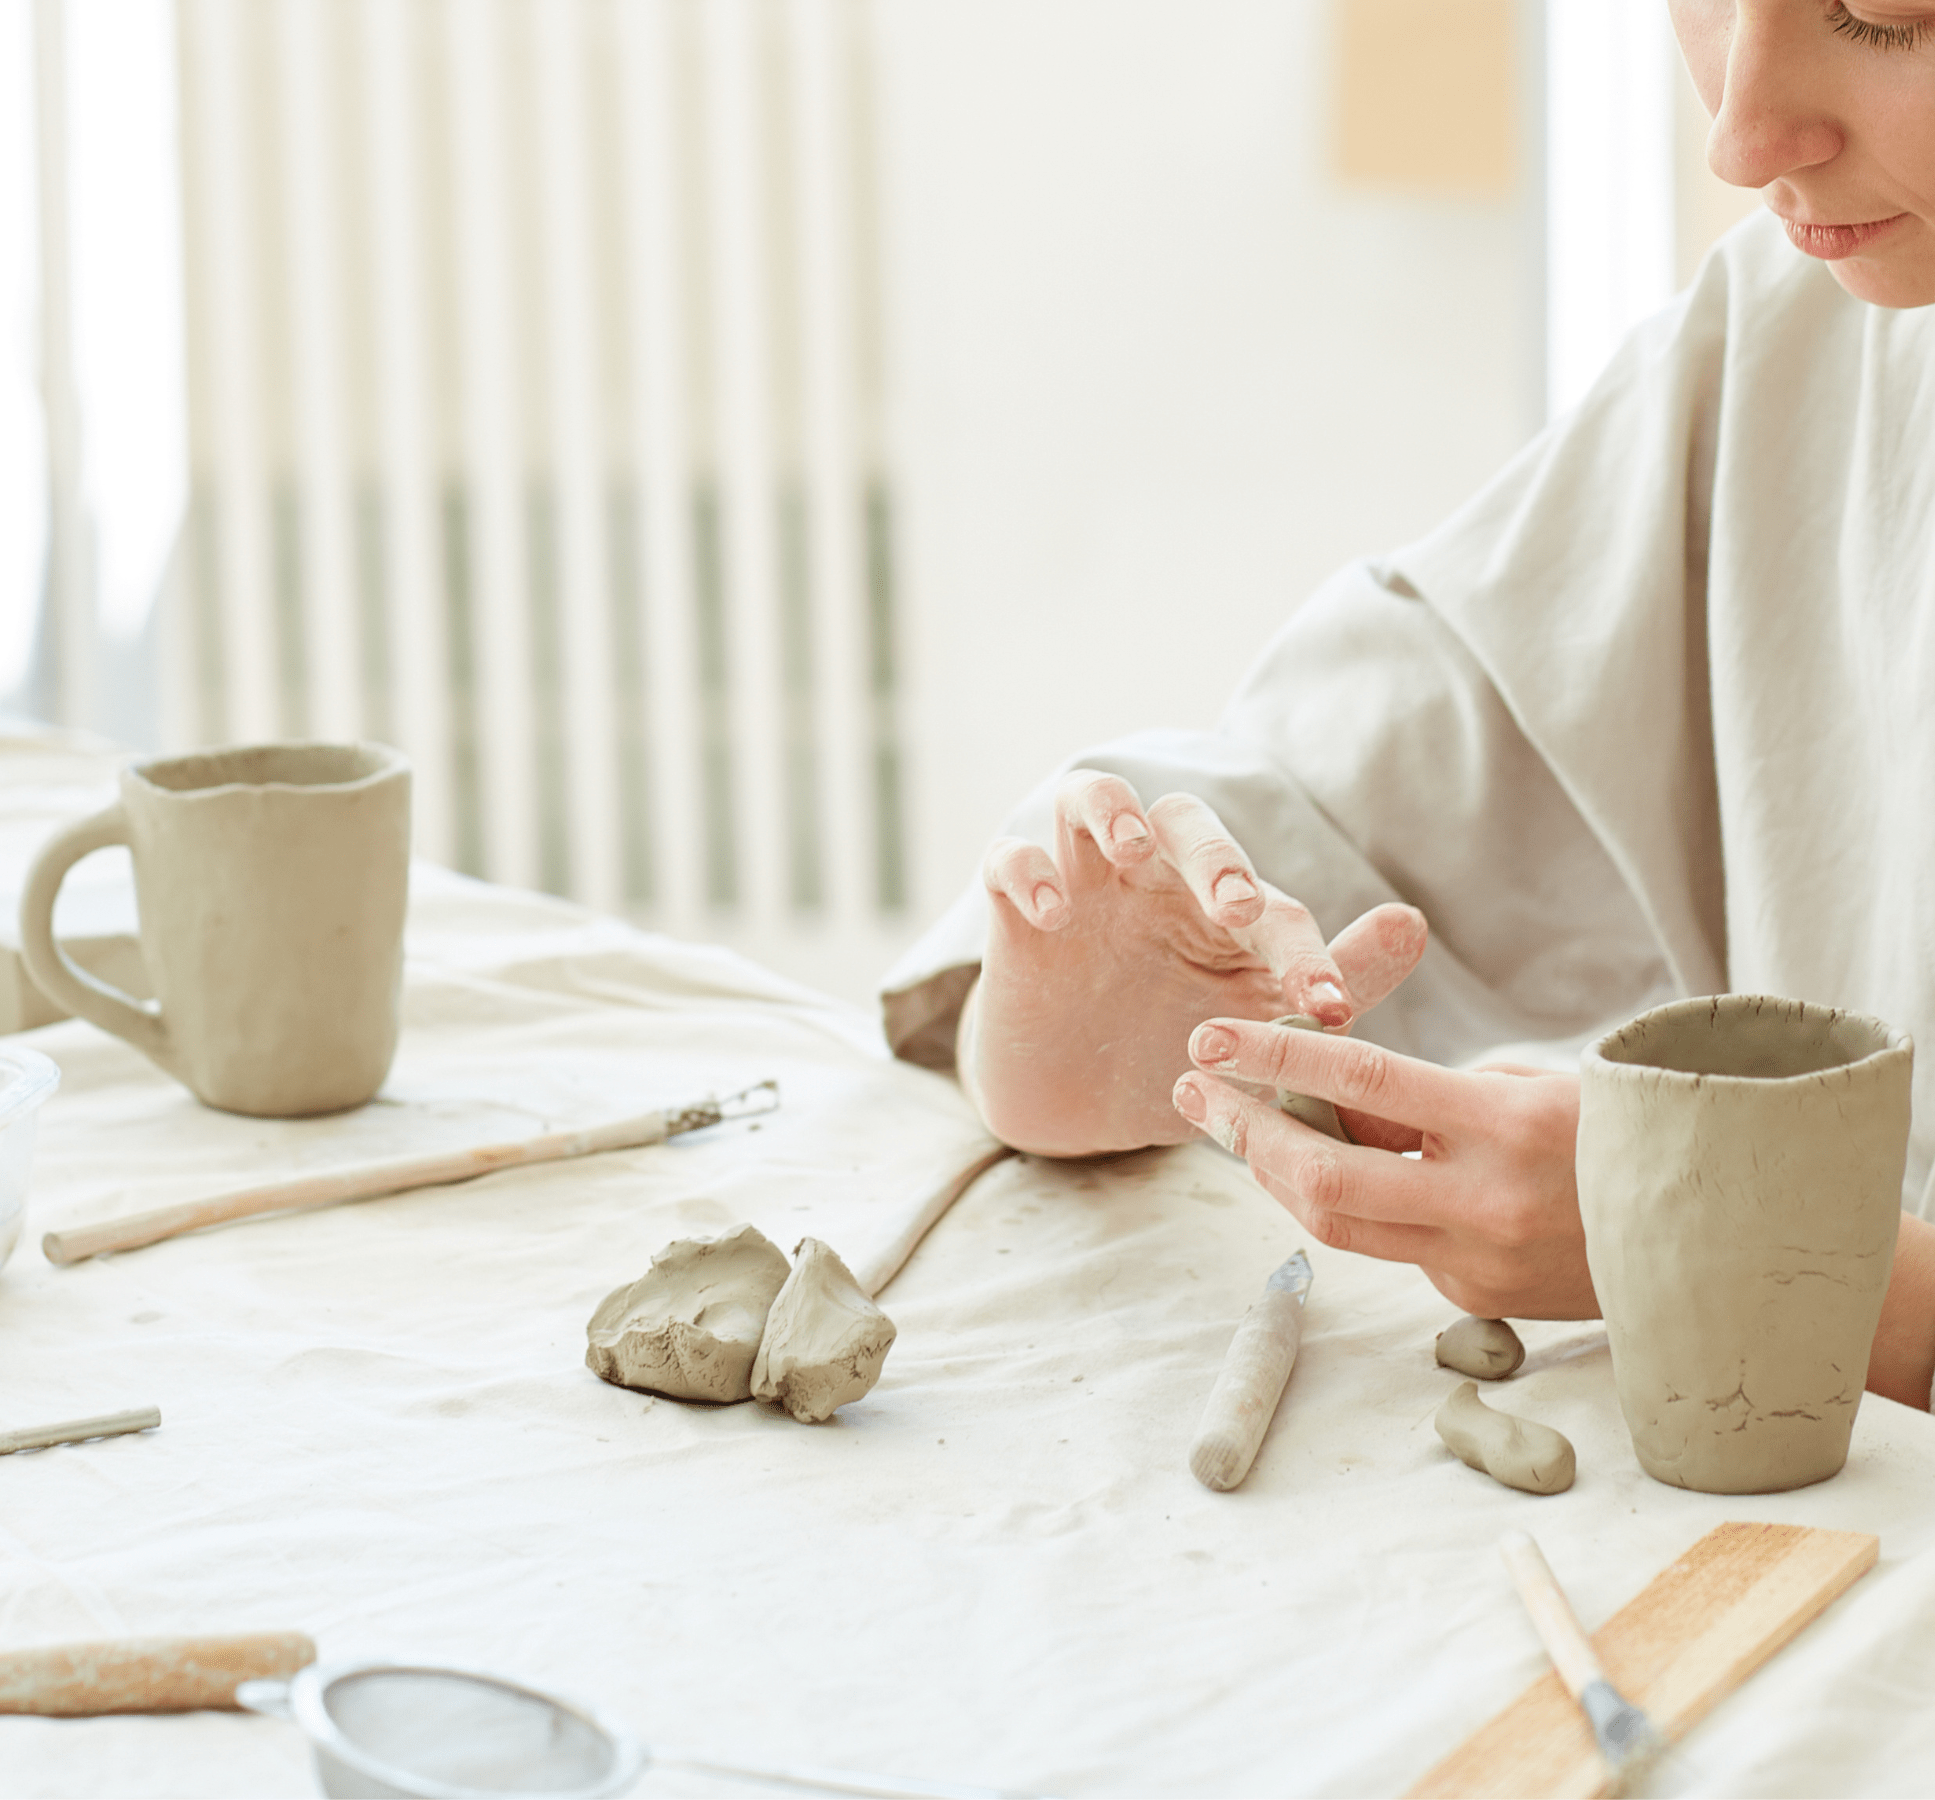 DIY Hand Building Pottery Craft Kit